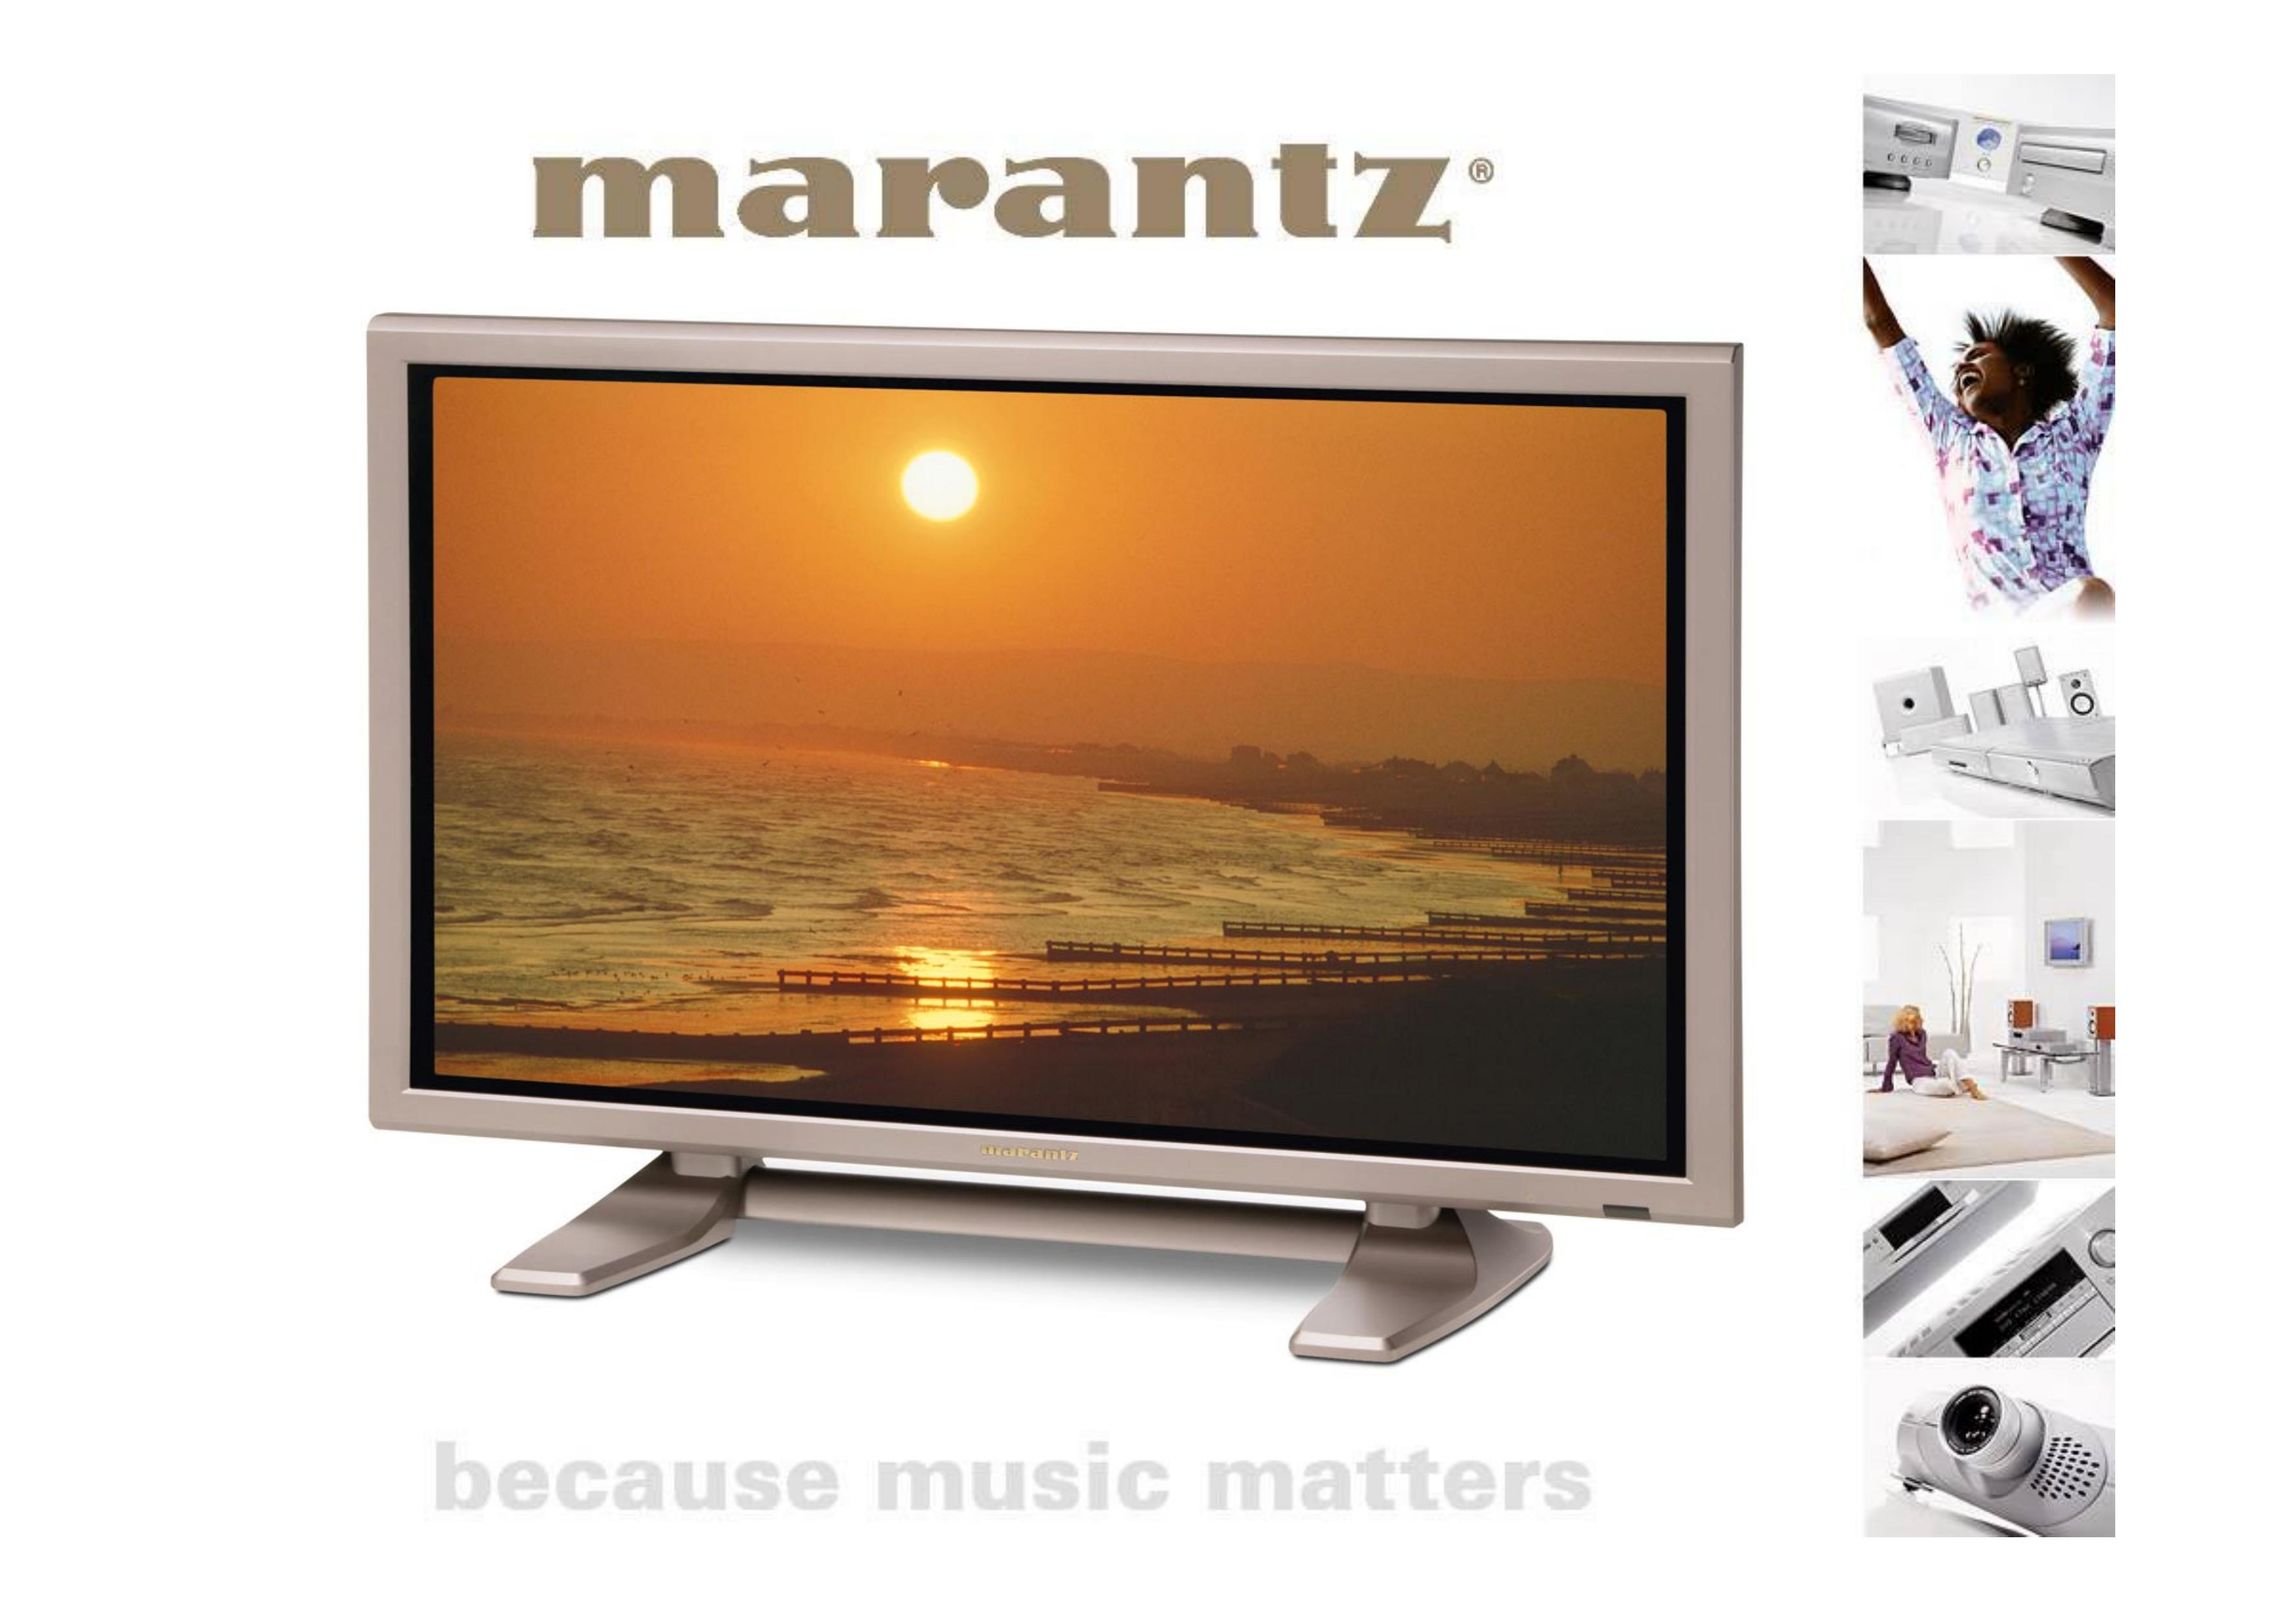 Marantz PD4220 Flat Panel Television User Manual